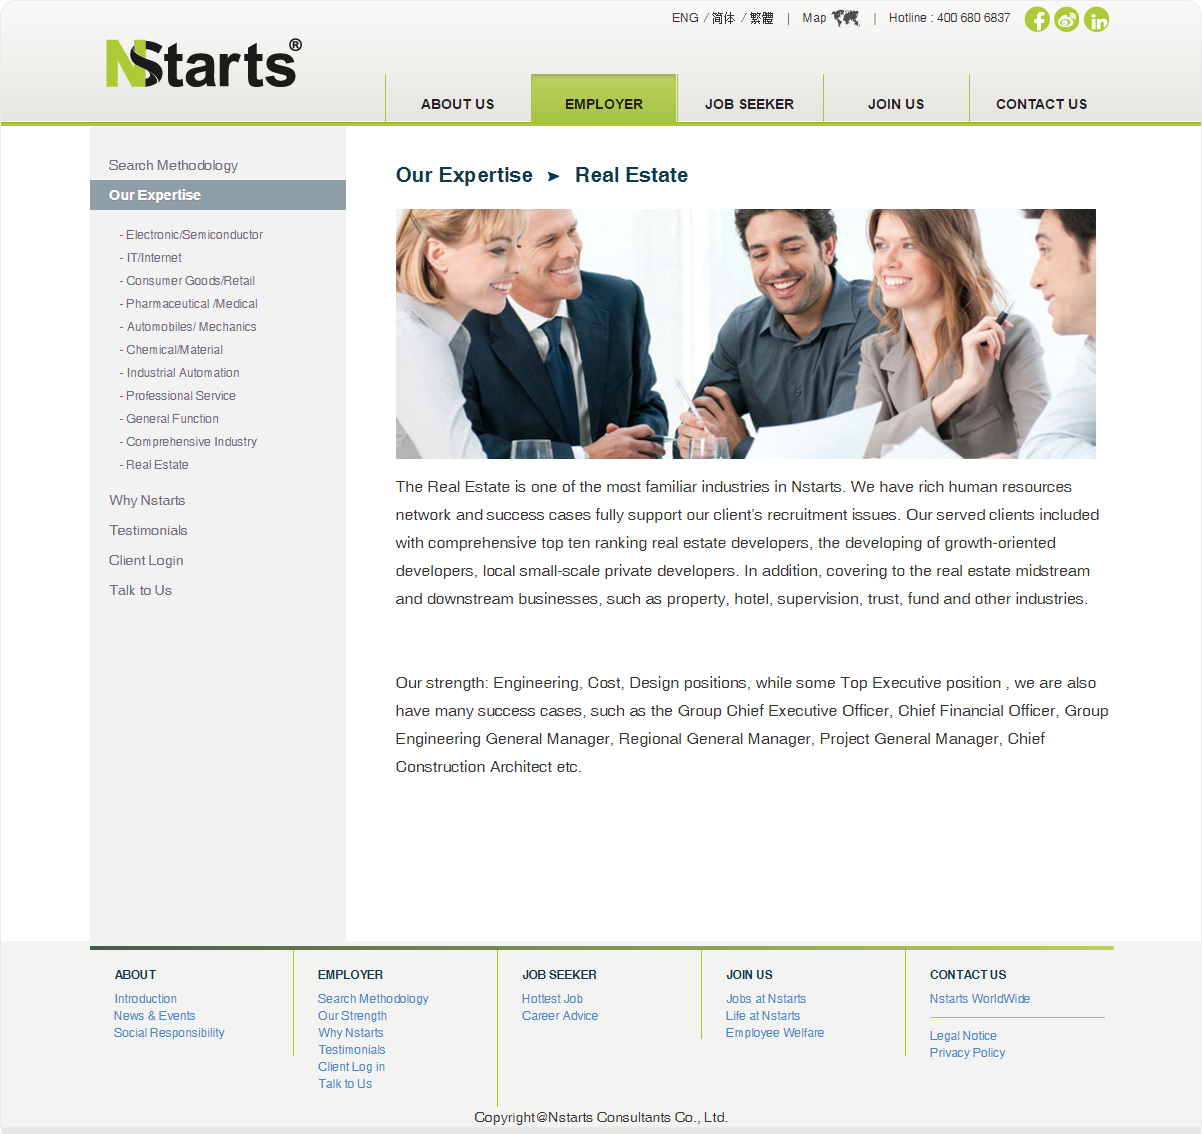 Nstarts Consultants Co., Ltd.